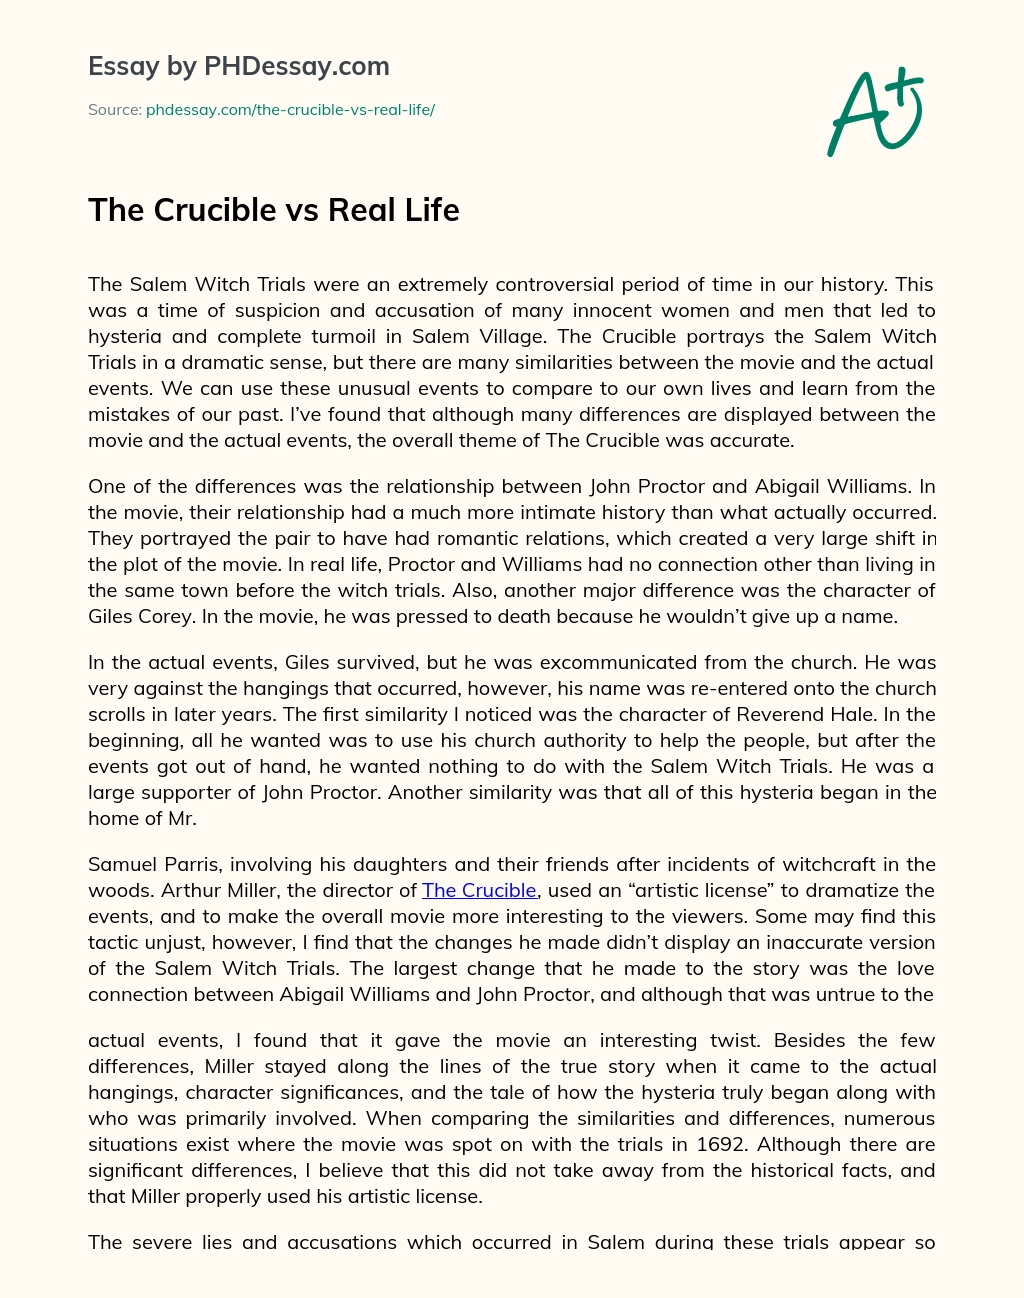 The Crucible vs Real Life essay